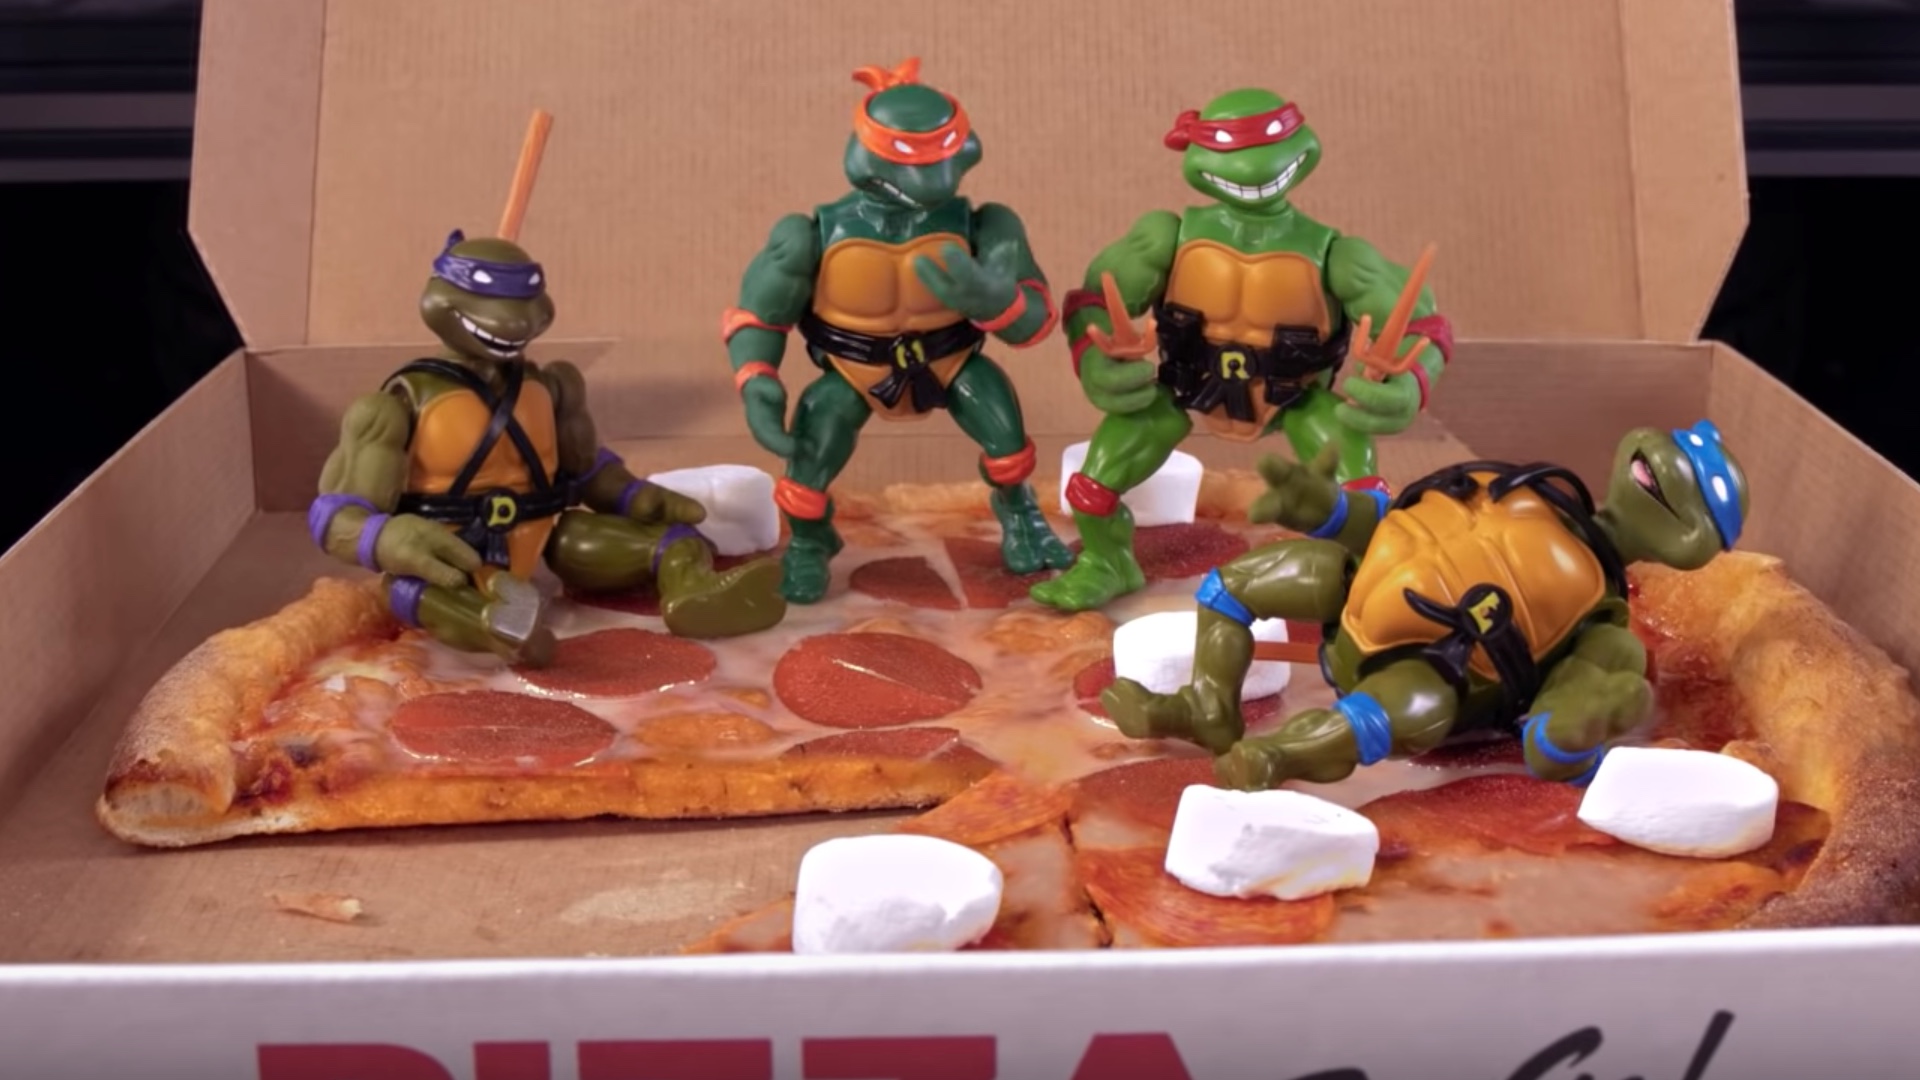 Черепашки ниндзя пародия. 1980s TMNT. Ten inch Mutant Ninja Turtles 2016 порнопародия. Черепахи ниндзя которые едят пиццу фигурки. Teenage Mutant Ninja Turtles 1989 giant Turtle Action Figure reproductions 2022.